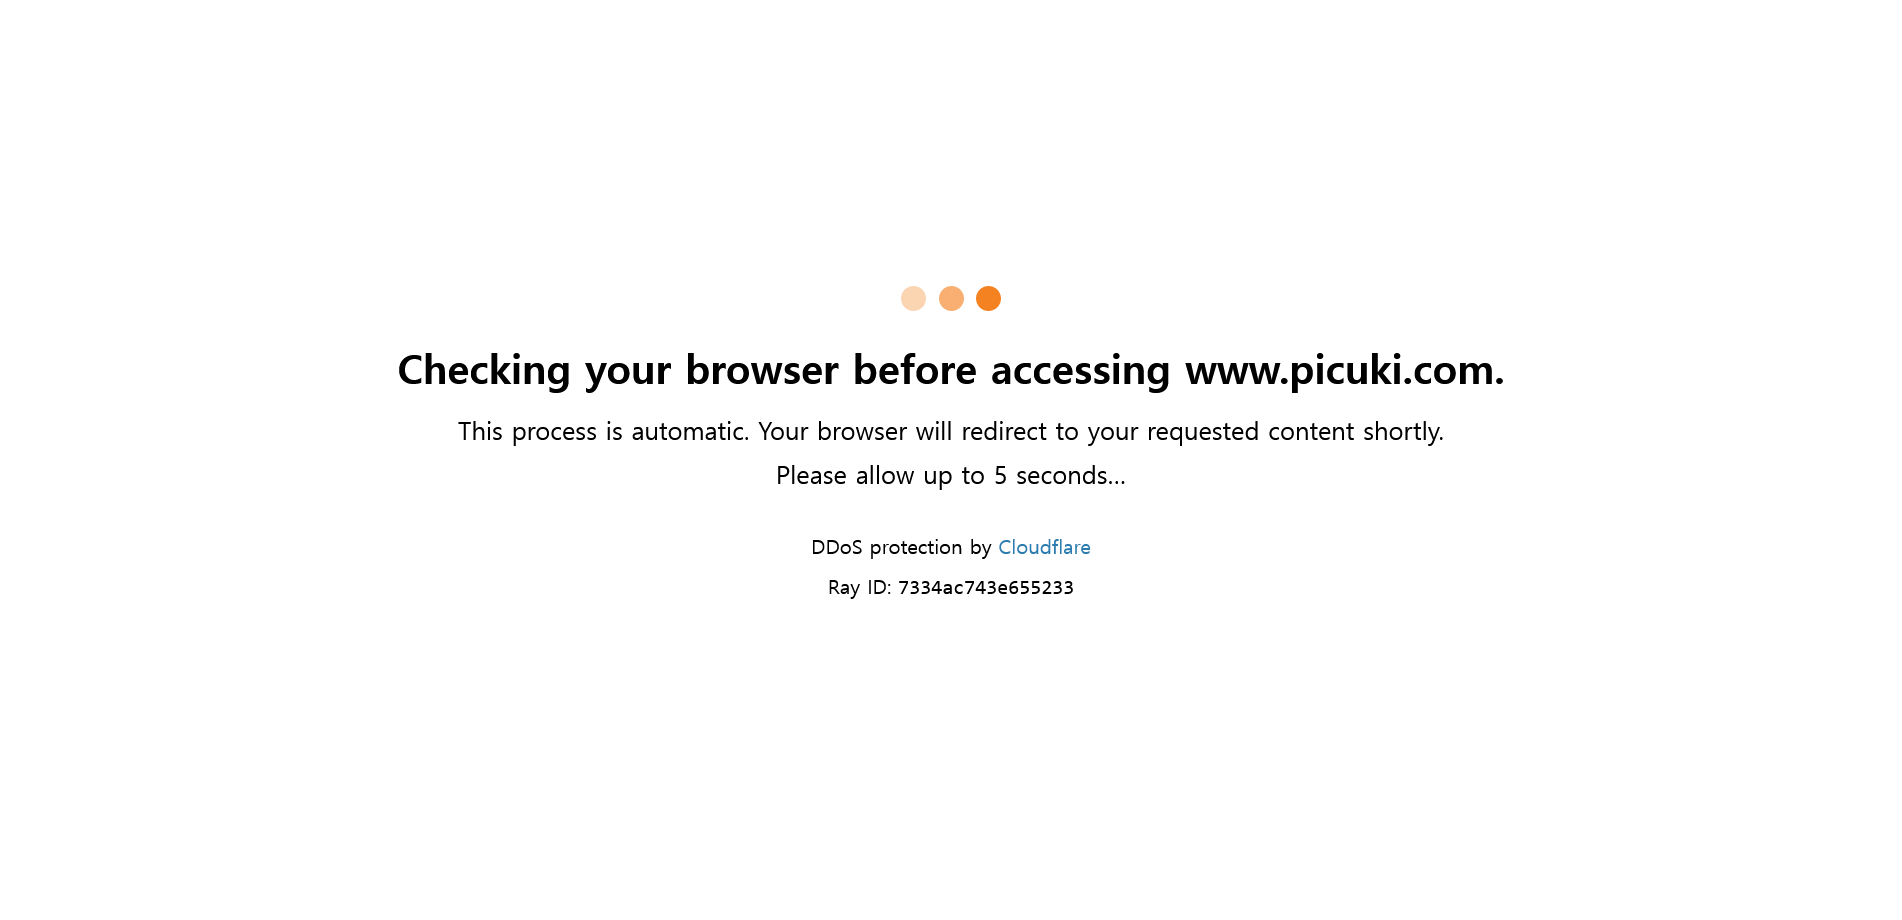 Cloudflare 화면 - picuki.com 접속